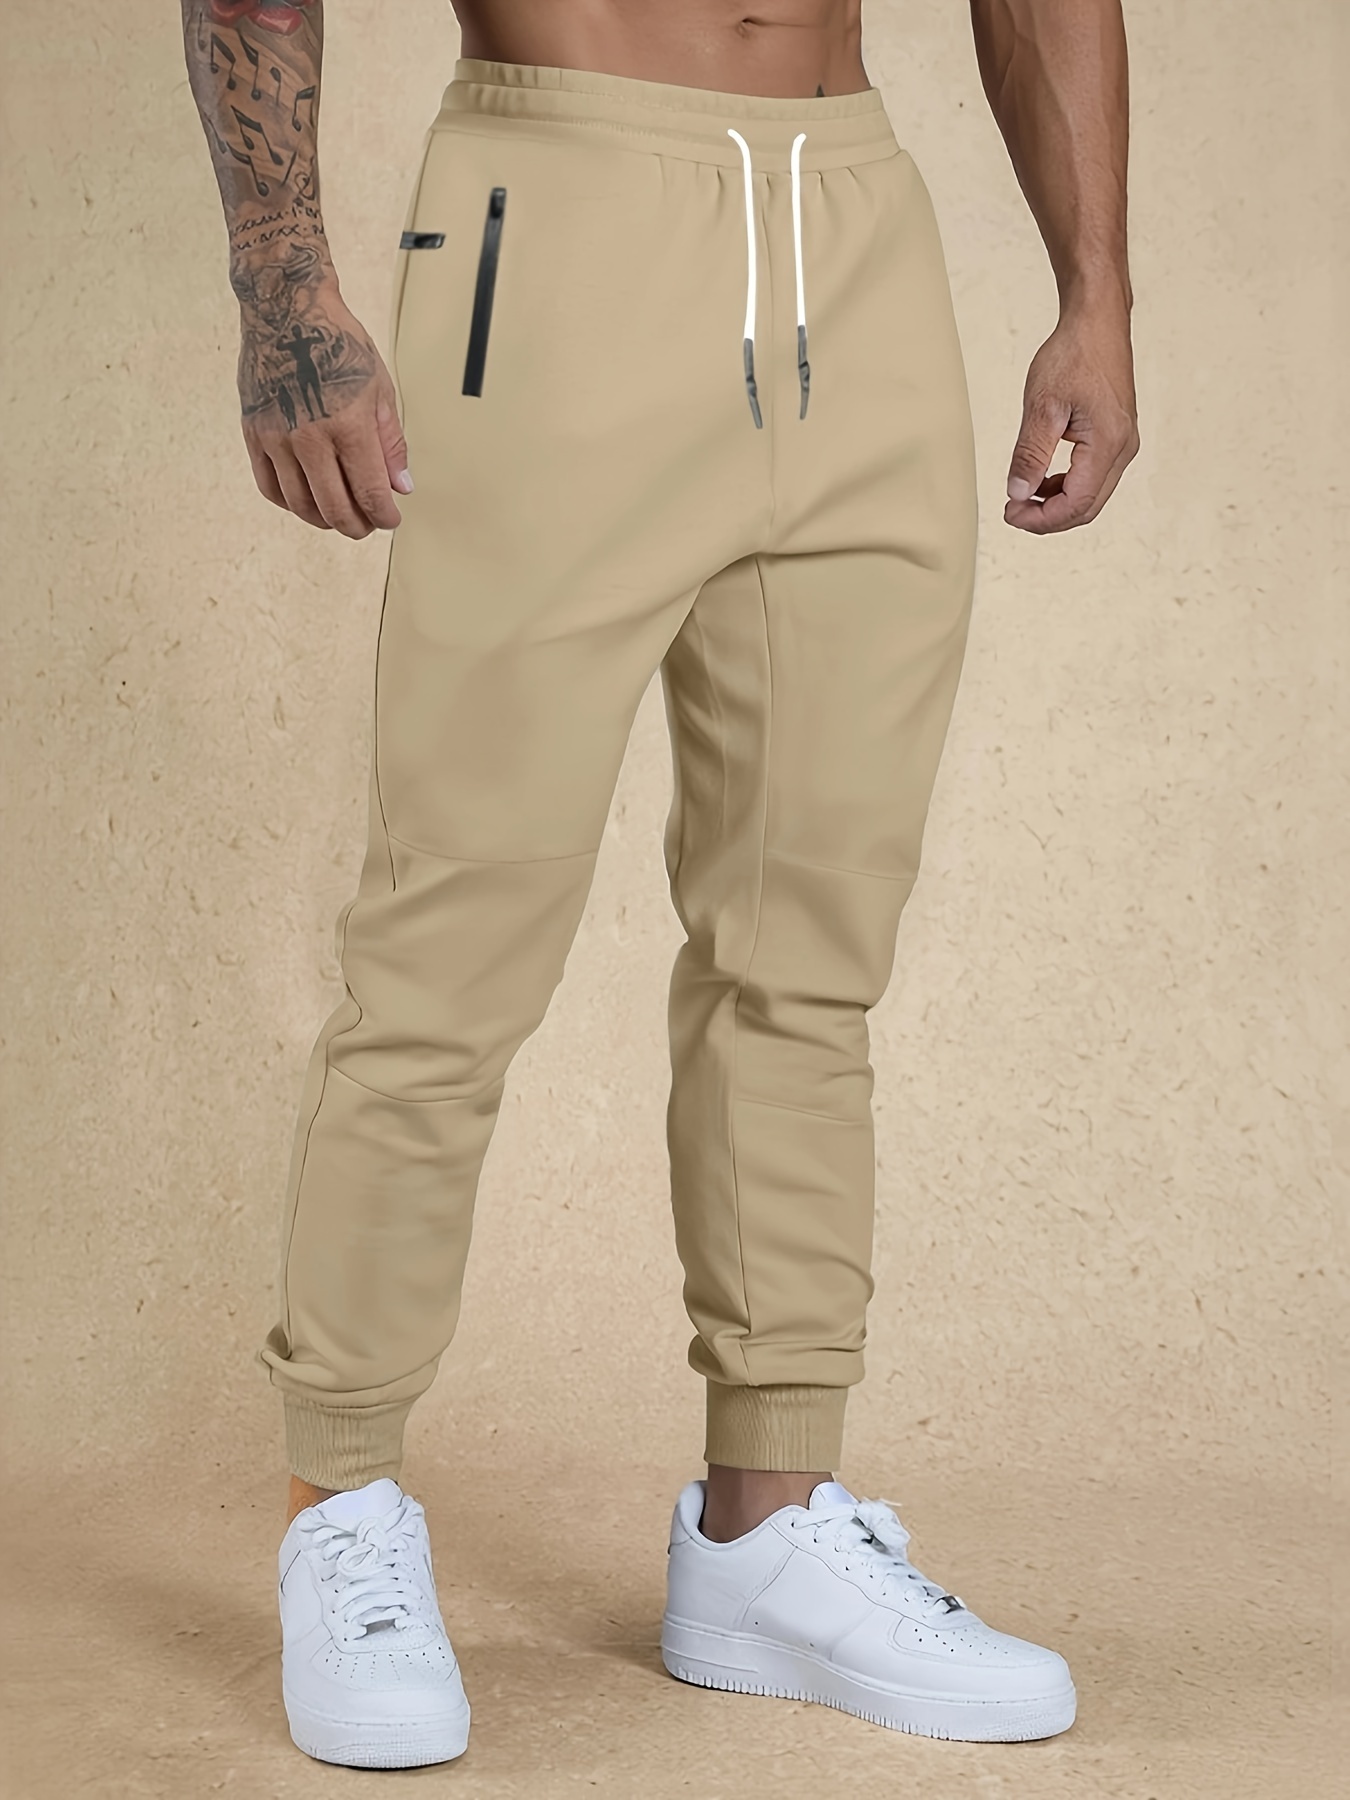 Men's Gym Jogger Pants Teen Hip Hop Slim Fit Workout Running Sweatpants  Zipper Pockets Colorblock Track Pants Trousers 